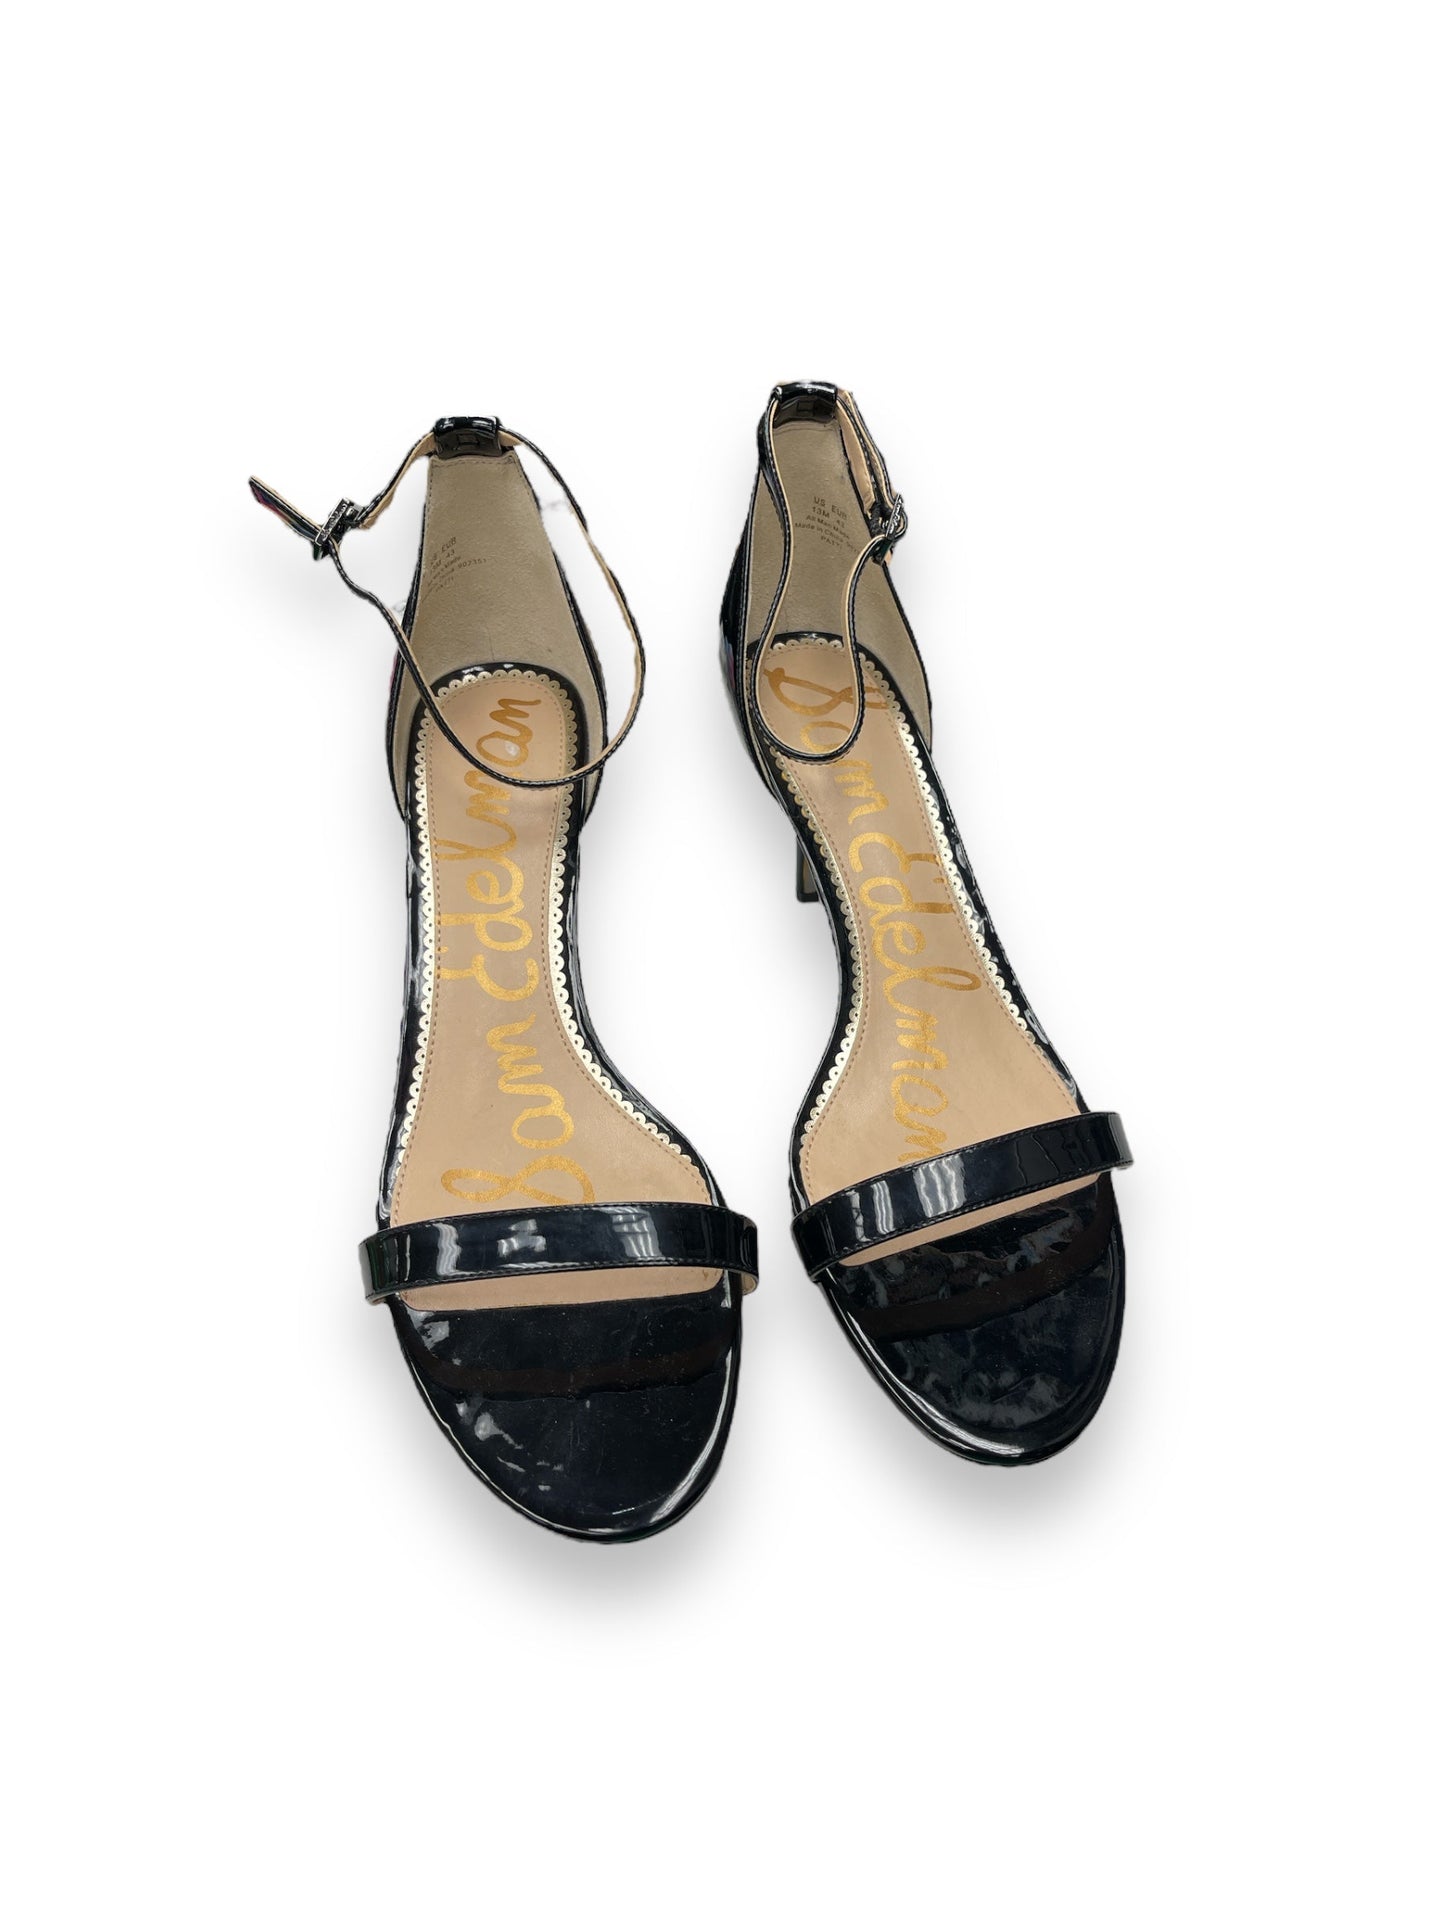 Shoes Heels Stiletto By Sam Edelman  Size: 13